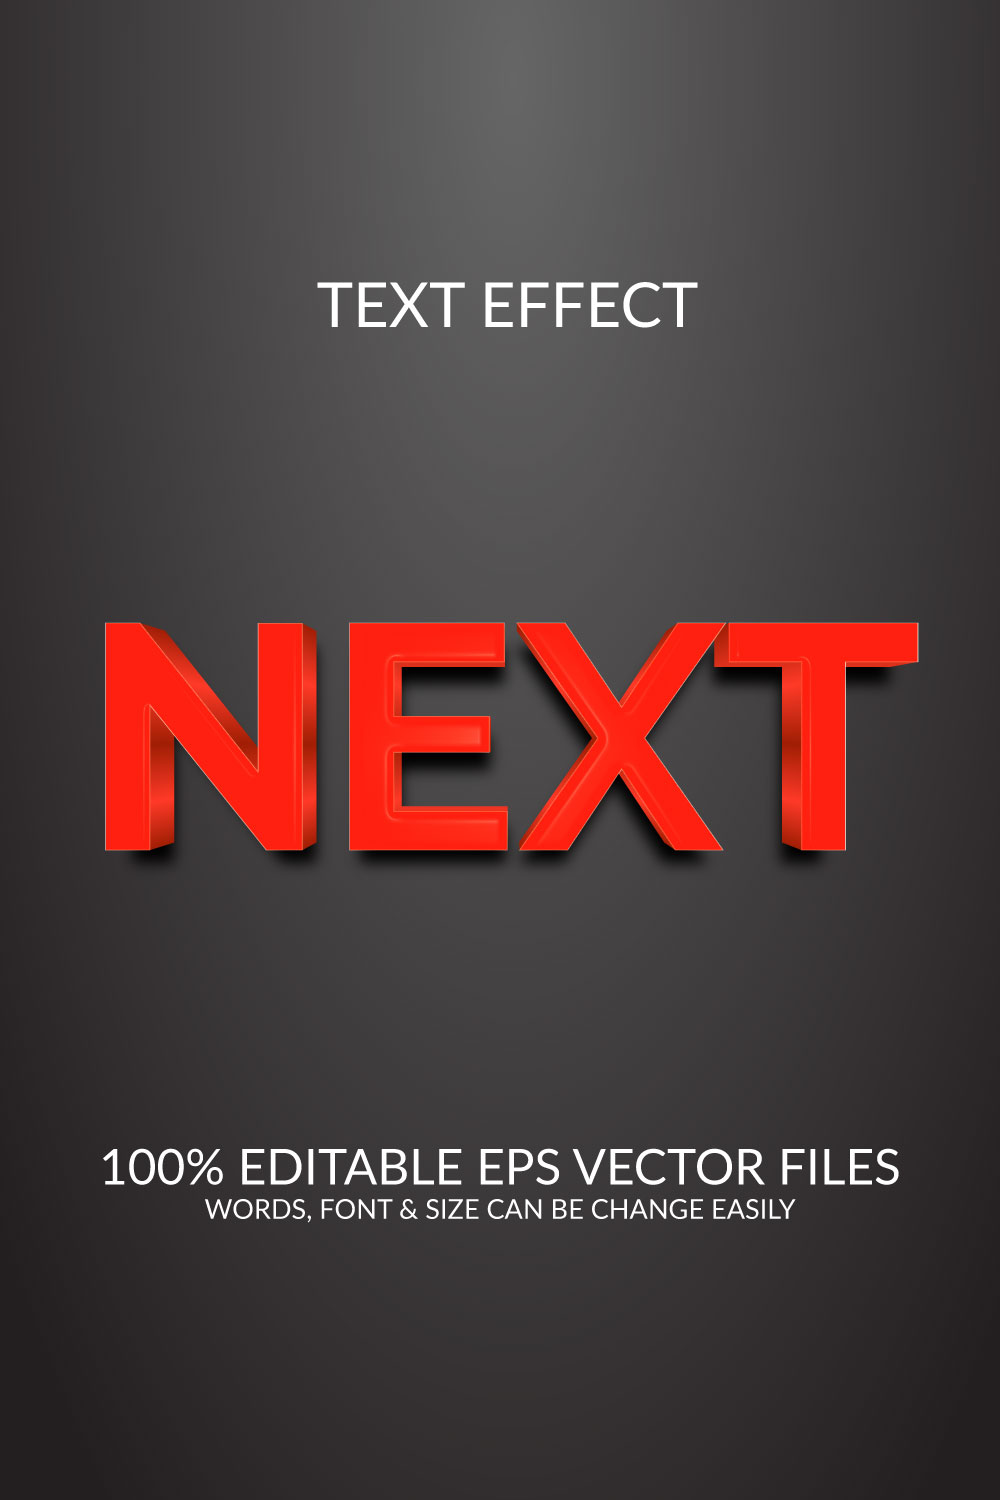 Next 3d vector text effect template design pinterest preview image.